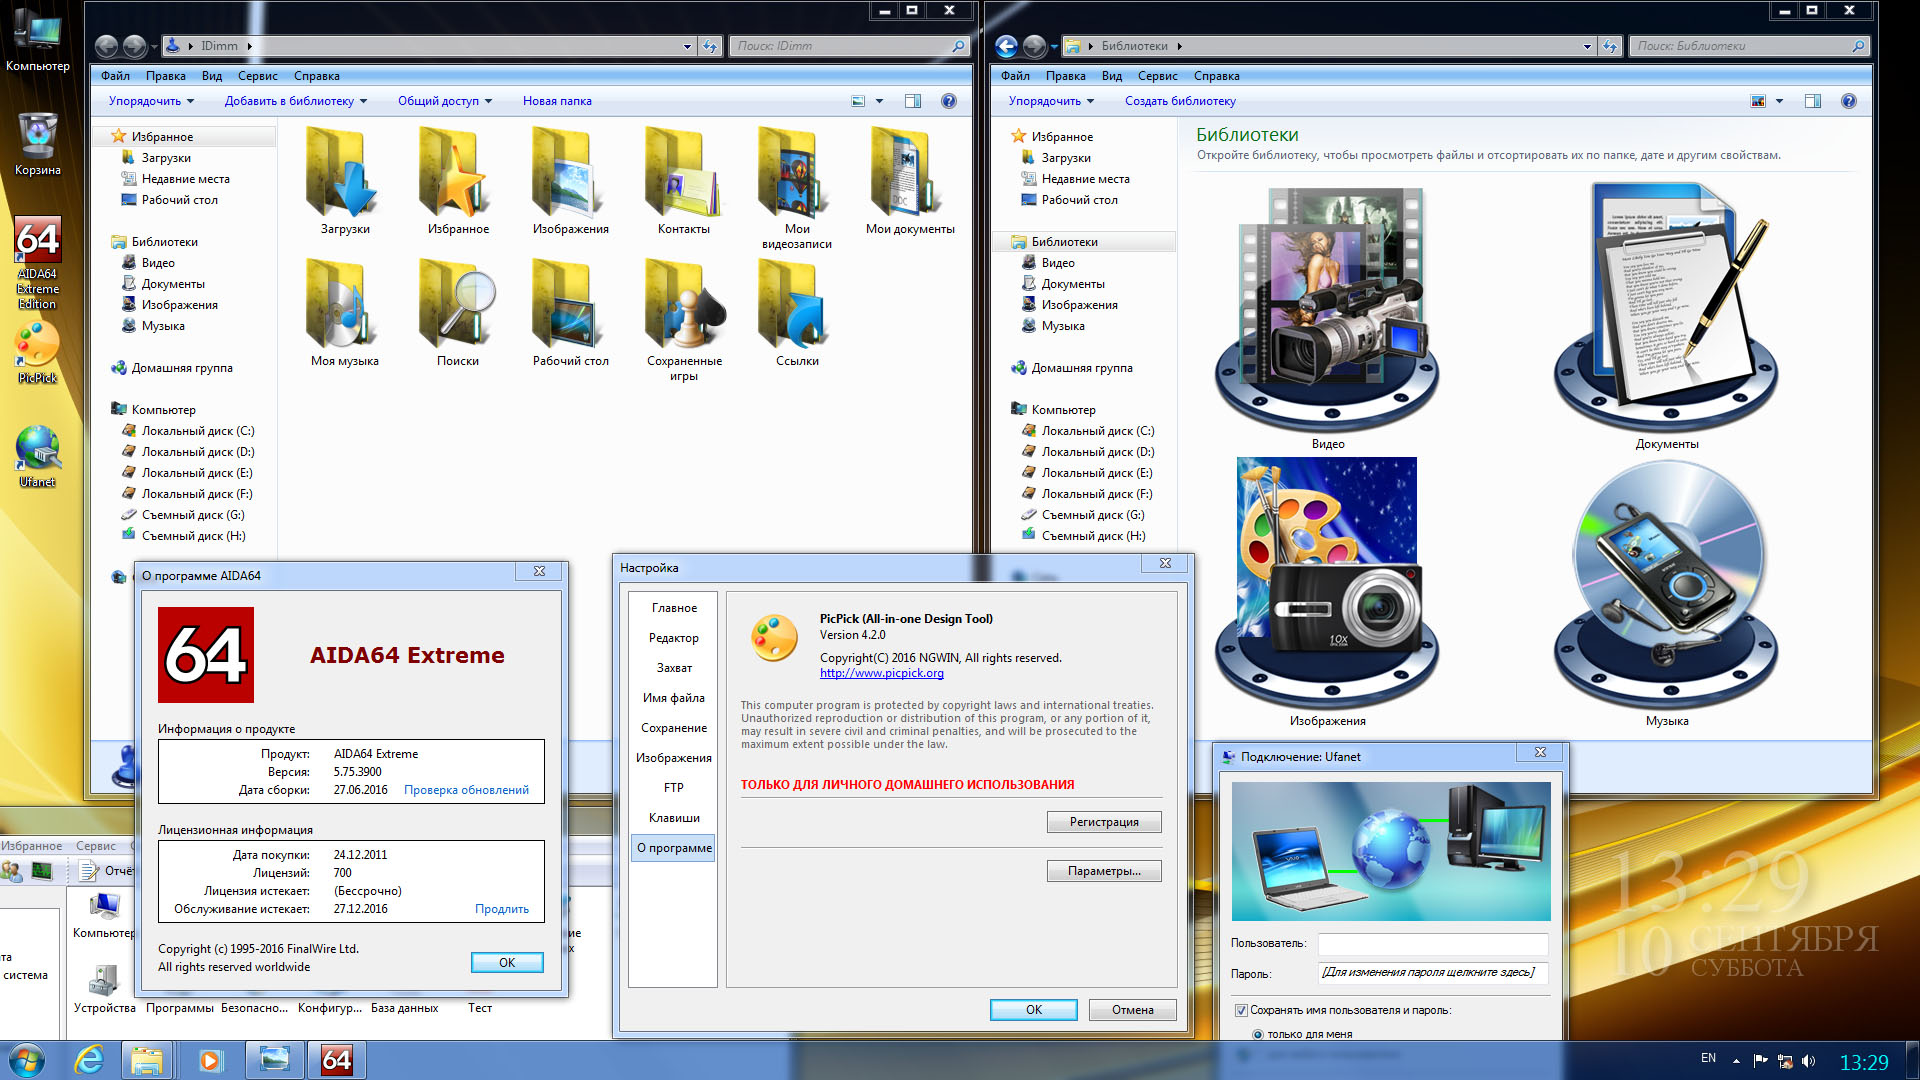 Windows 7 Professional SP1 х86/x64 IDimm Edition v.23.16 - «Windows»